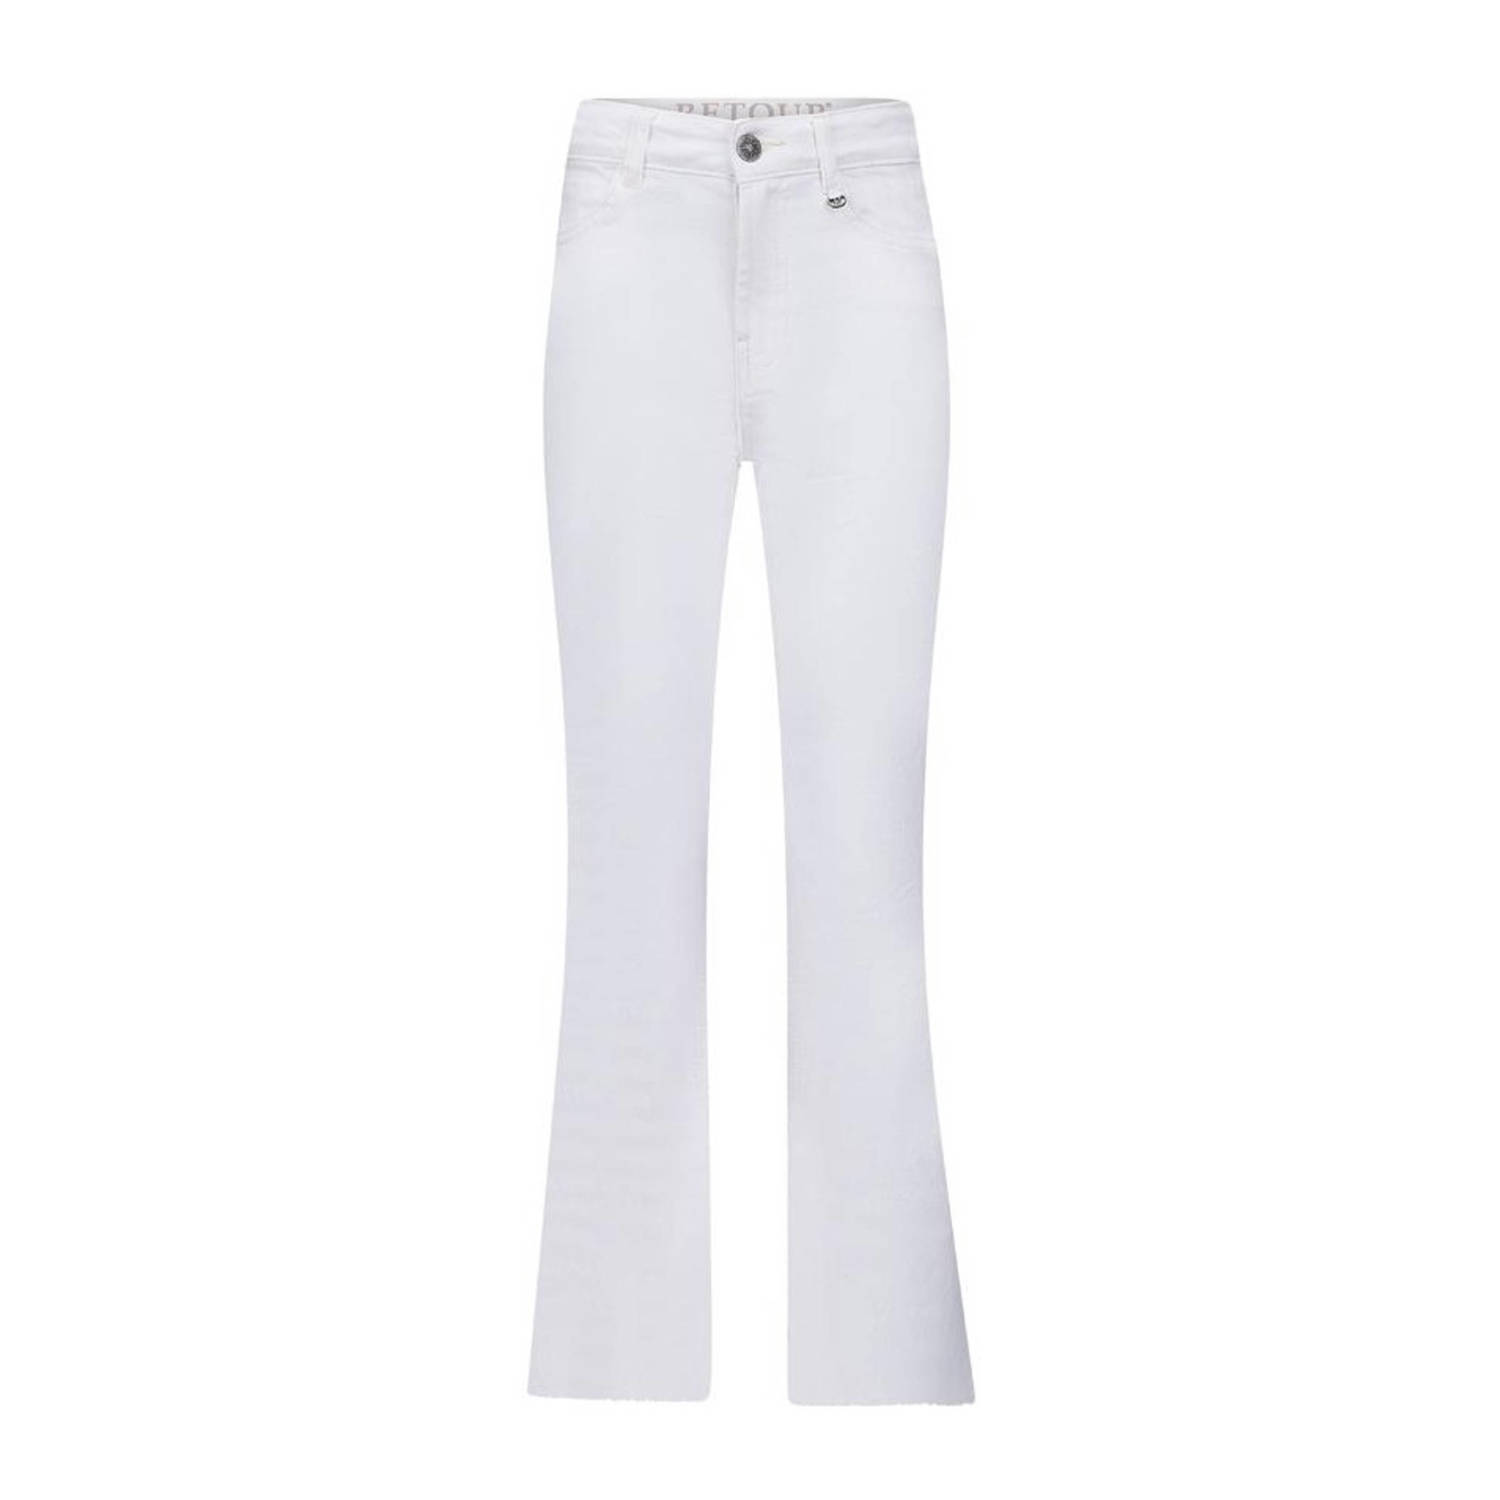 Retour Jeans flared jeans Valentina white denim Wit Meisjes Stretchdenim 122